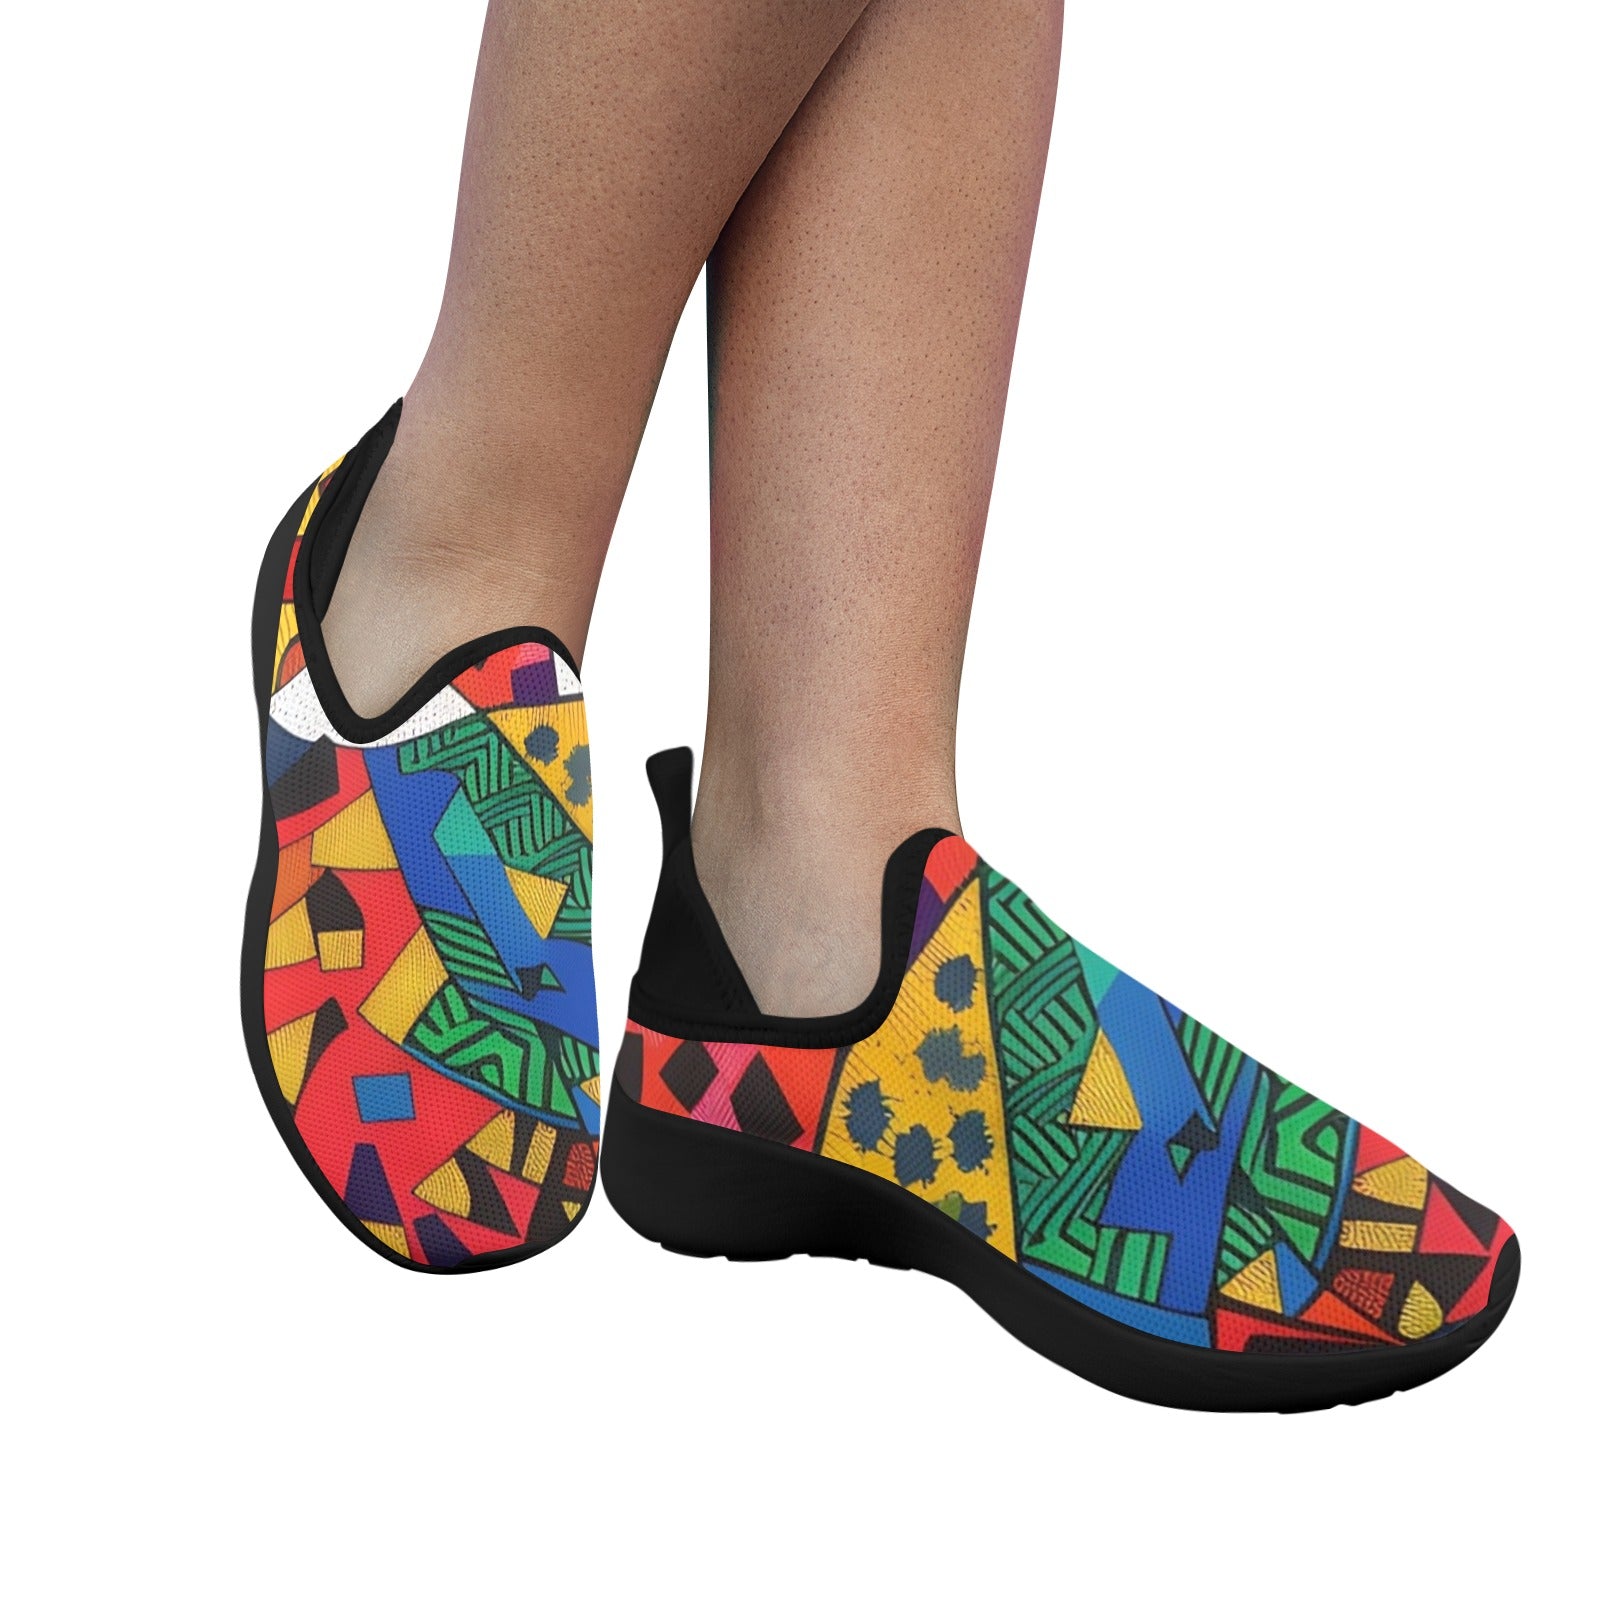 Polygon Sneaker - Fly Weave Drop-in Heel Sneakers for Women - Chris Thompkins